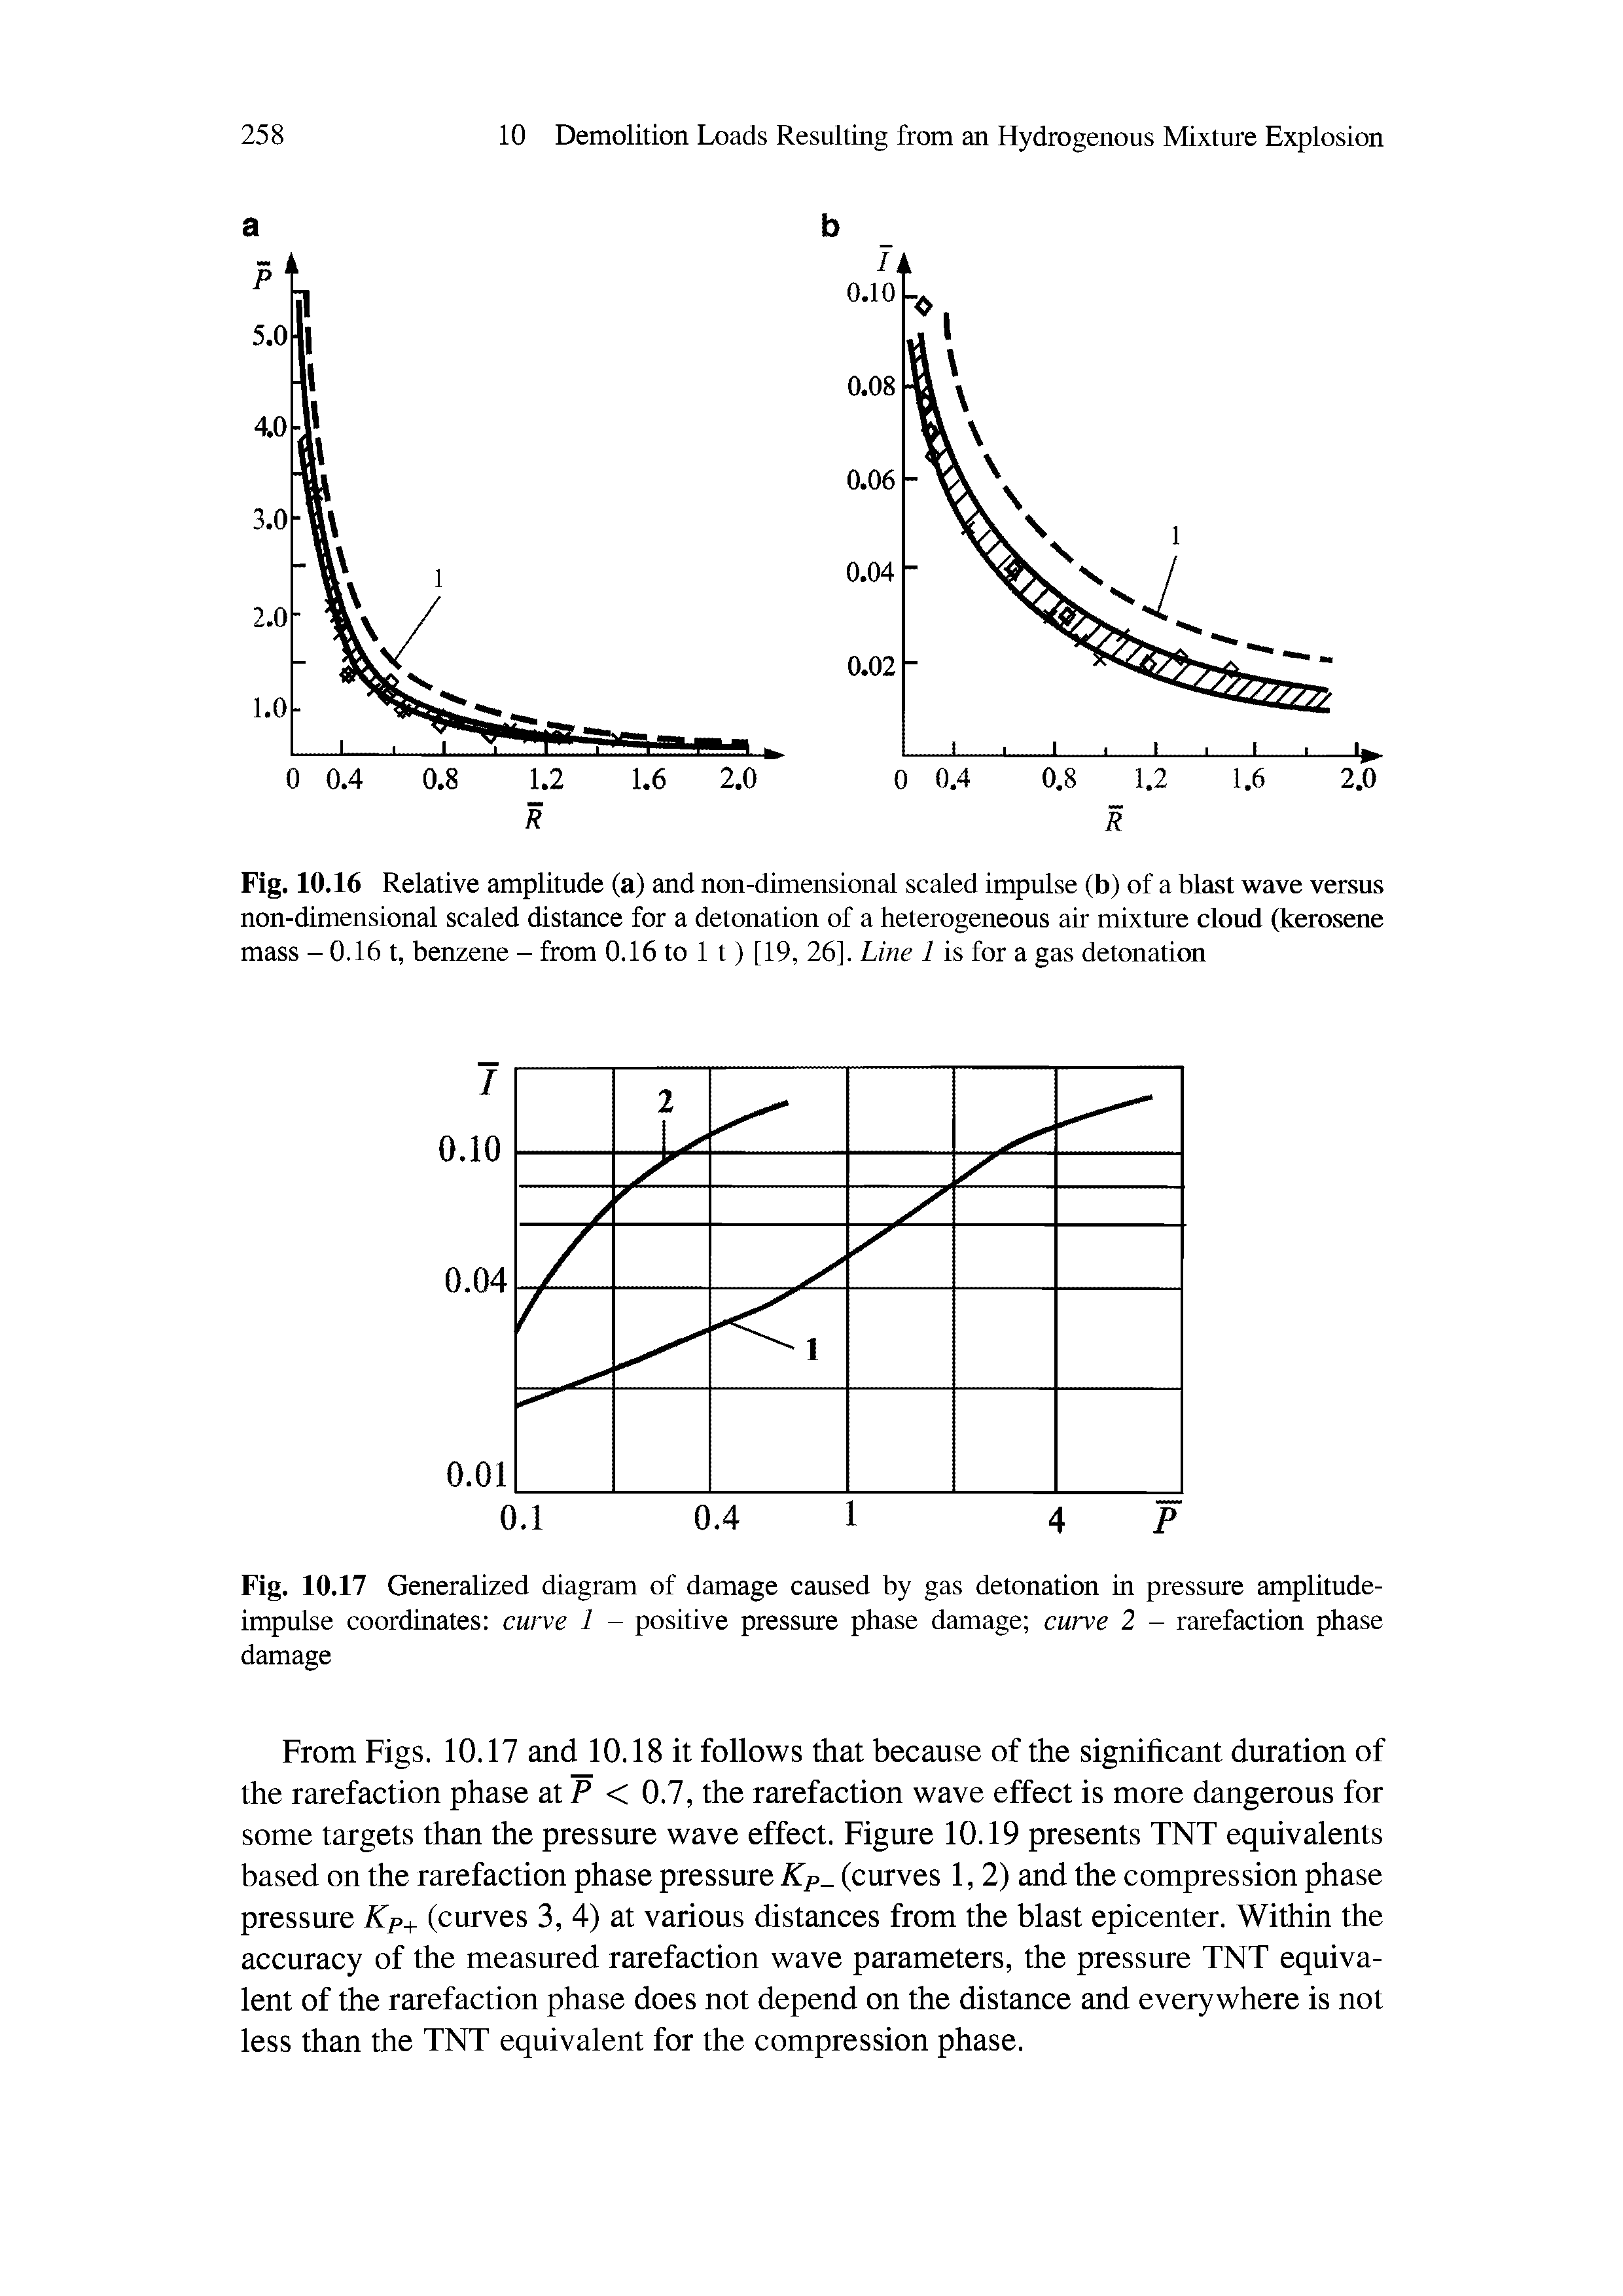 Fig. 10.17 Generalized diagram of damage caused by gas detonation in pressure amplitude-impulse coordinates cwve 1 - positive pressure phase damage curve 2 - rarefaction phase damage...